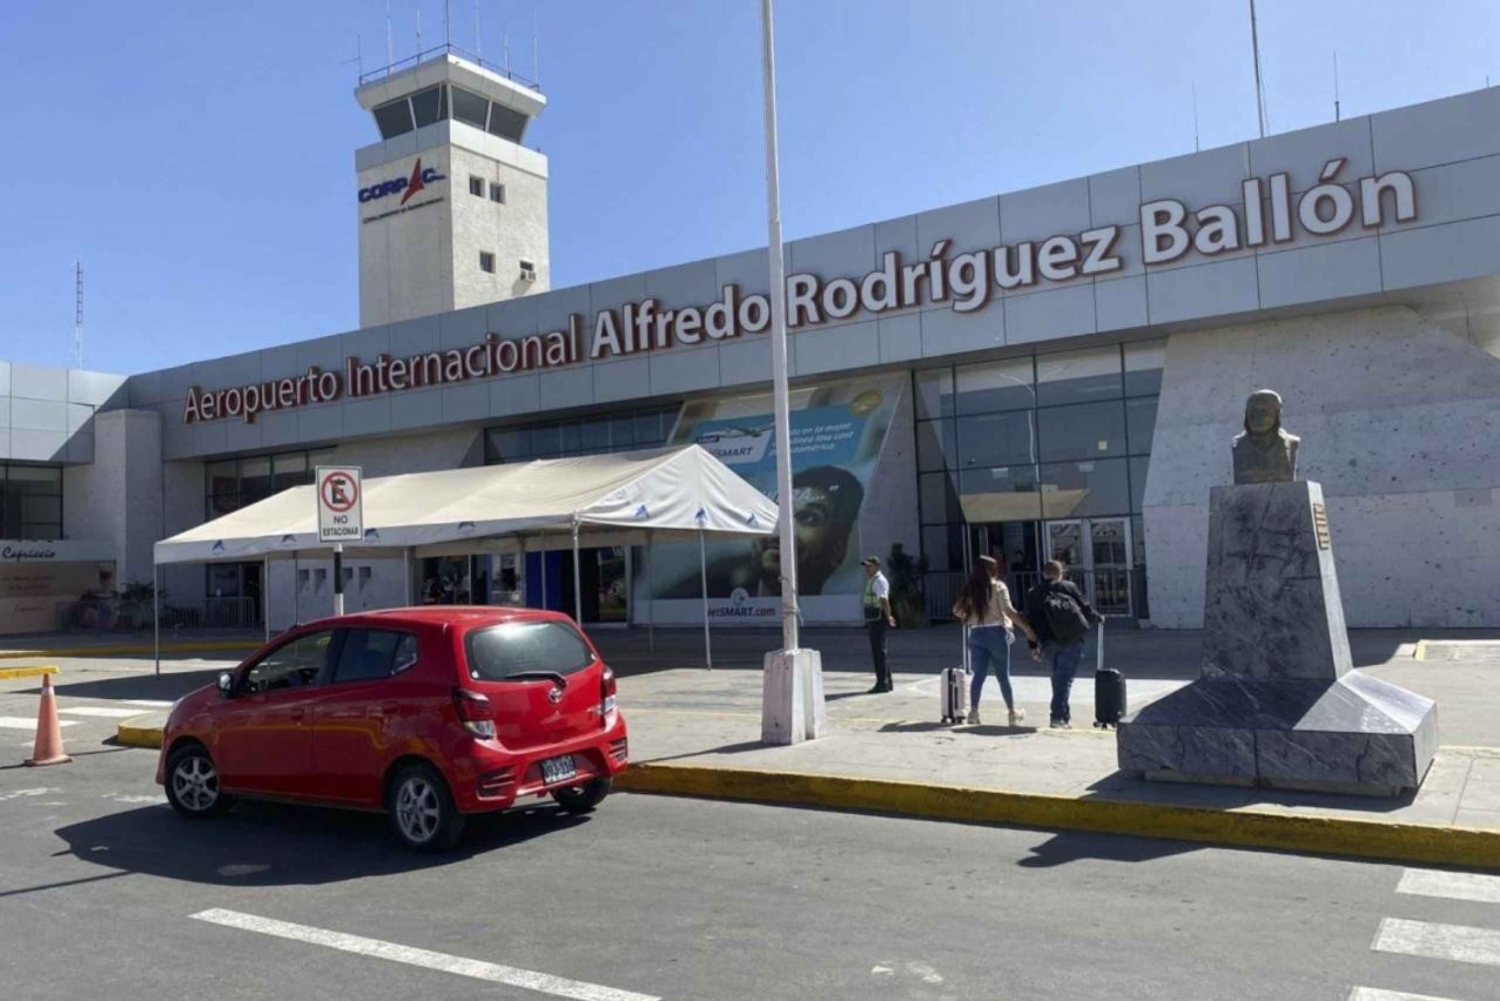 Afhentning i lufthavnen :Arequipa